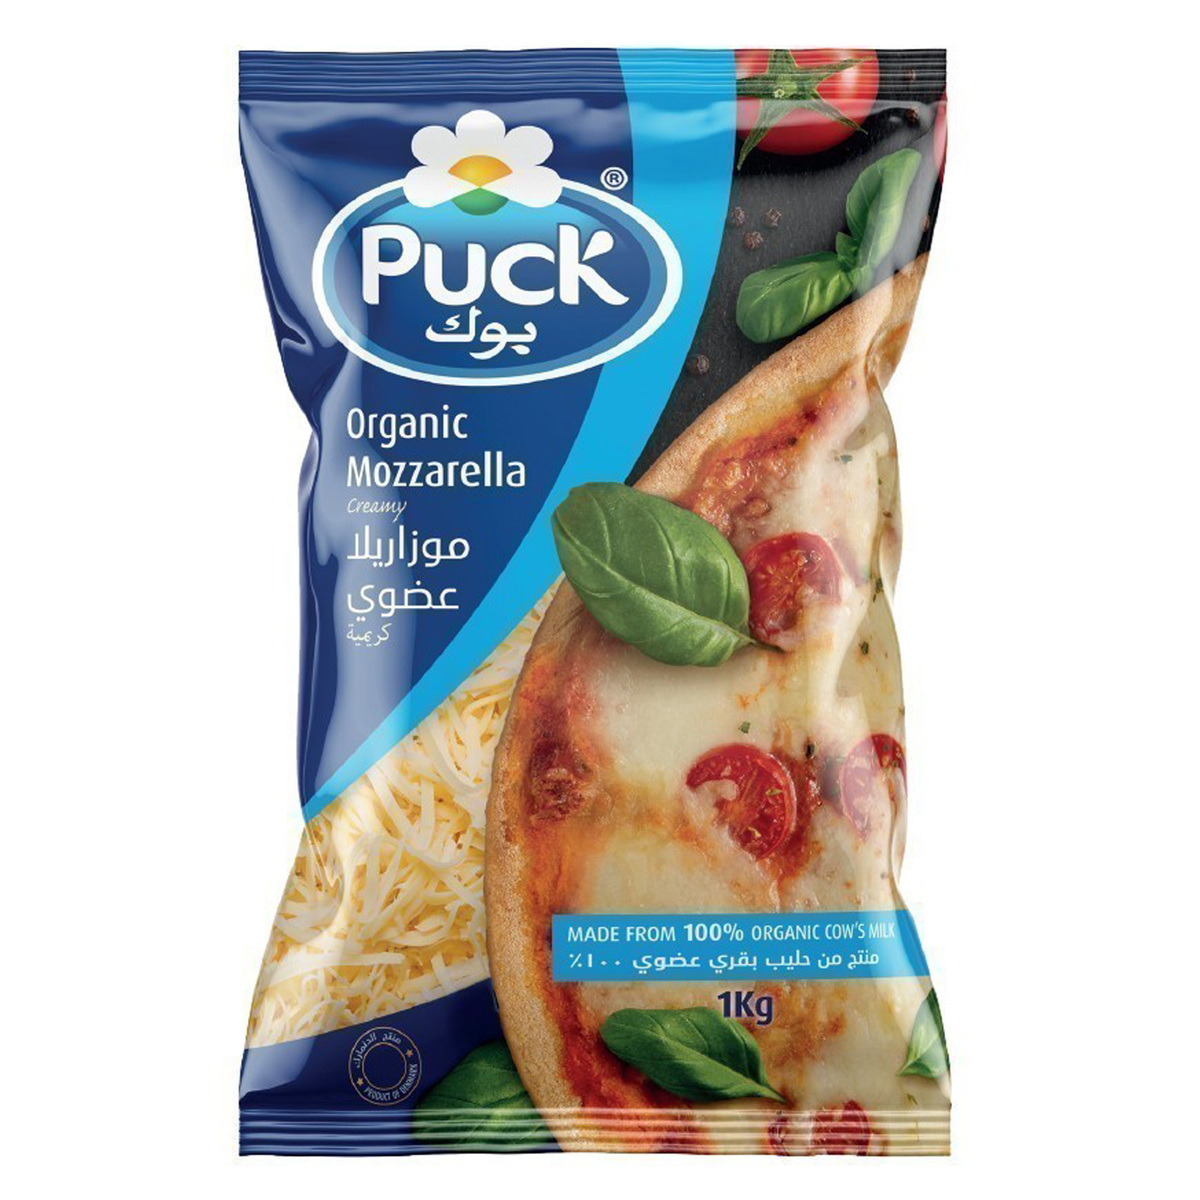 Puck Shredded Organic Mozzarella Cheese 1 kg